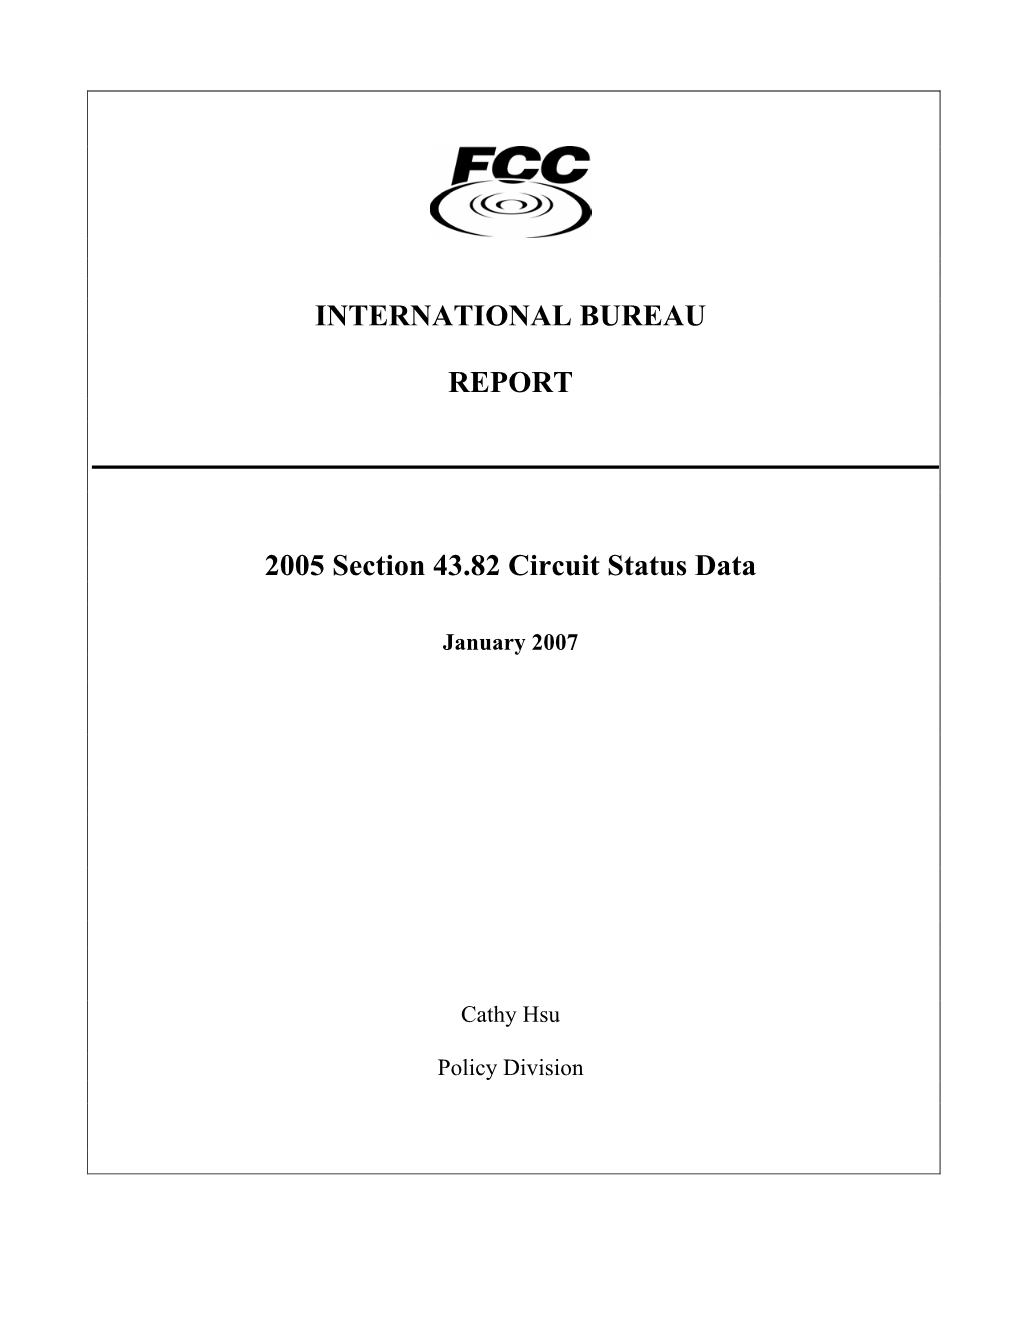 INTERNATIONAL BUREAU REPORT 2005 Section 43.82 Circuit Status